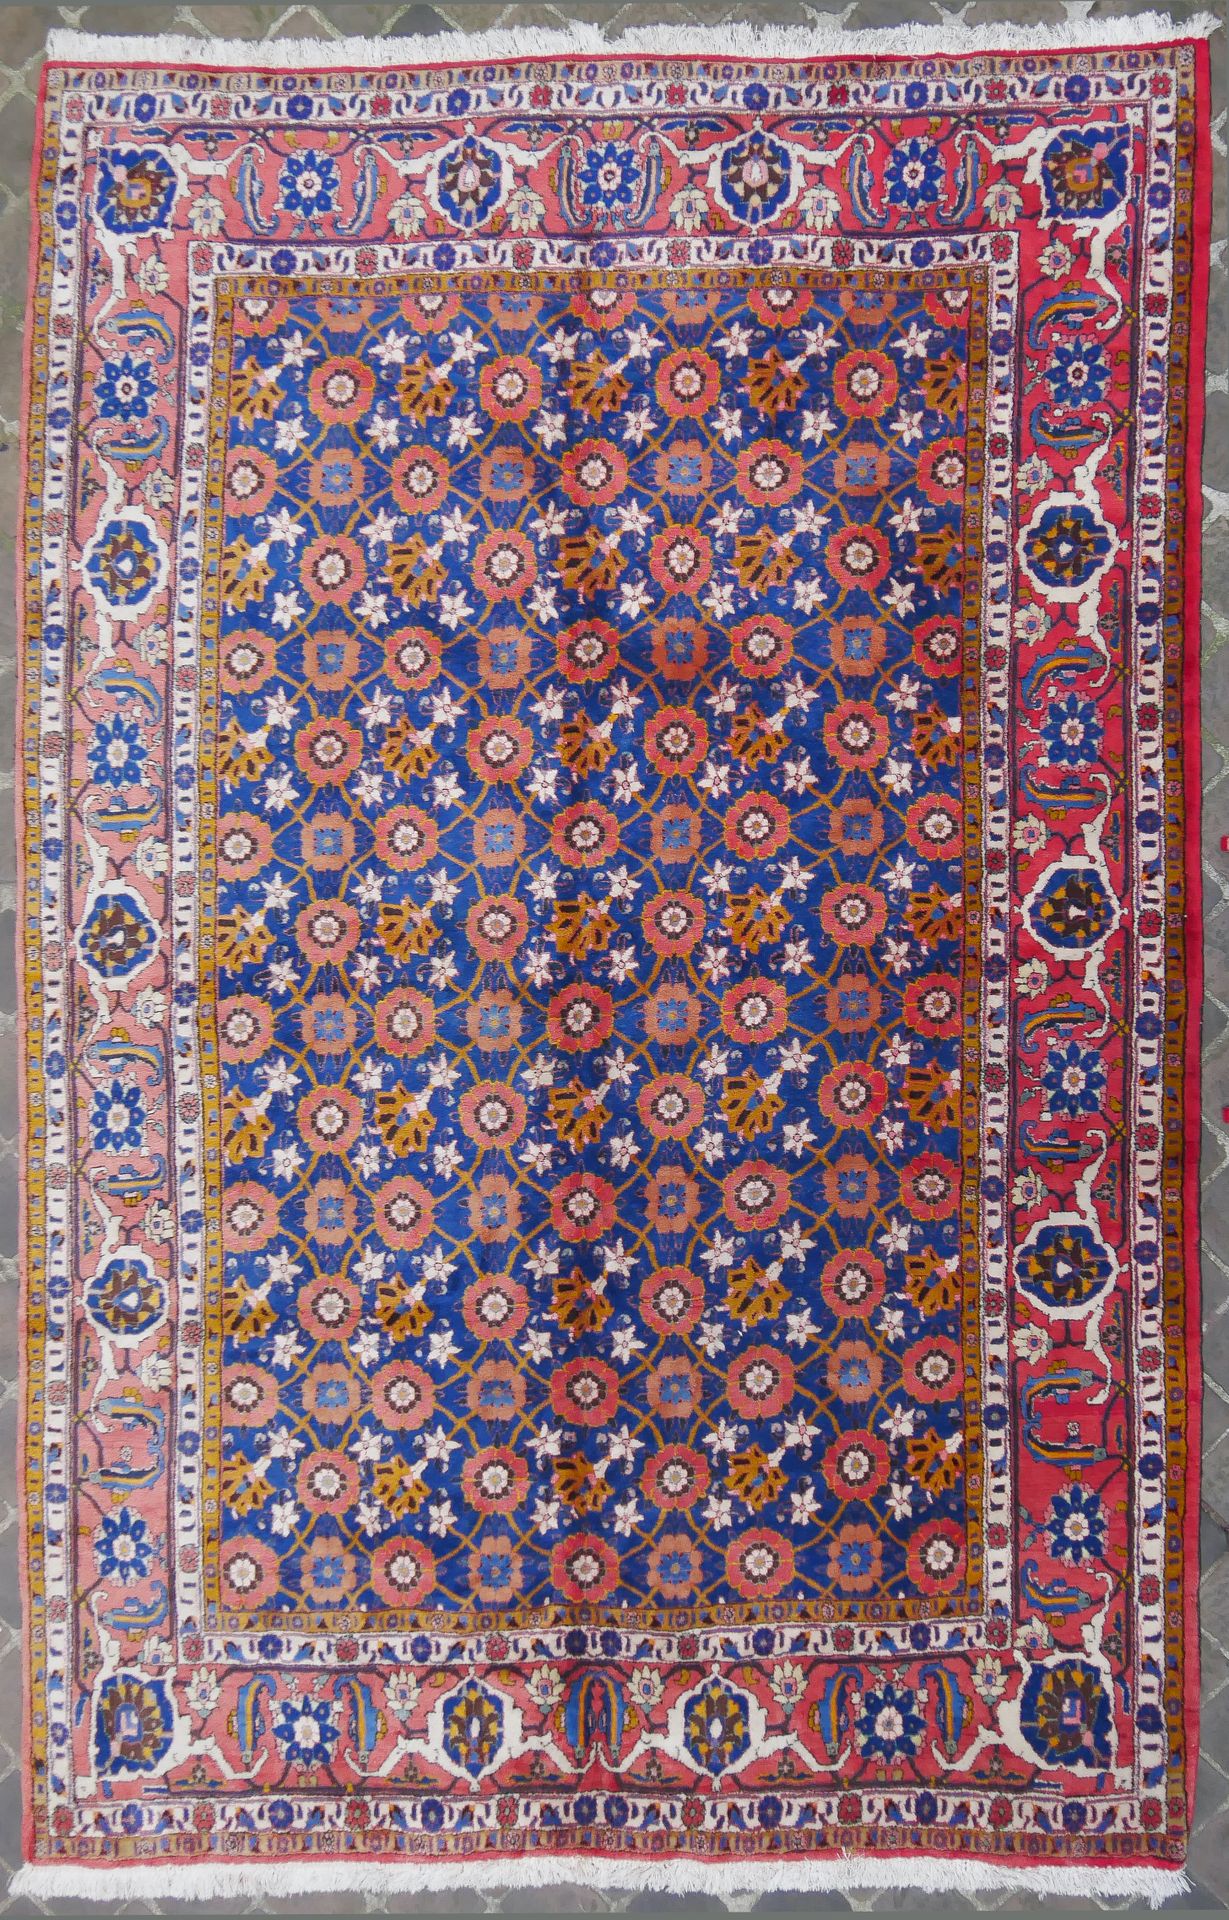 Null VERAMINE地毯（特黑兰地区），羊毛材质，约1970年，帝国蓝背景上的 "Mina Khani "图案。状况非常好。315 x 205厘米